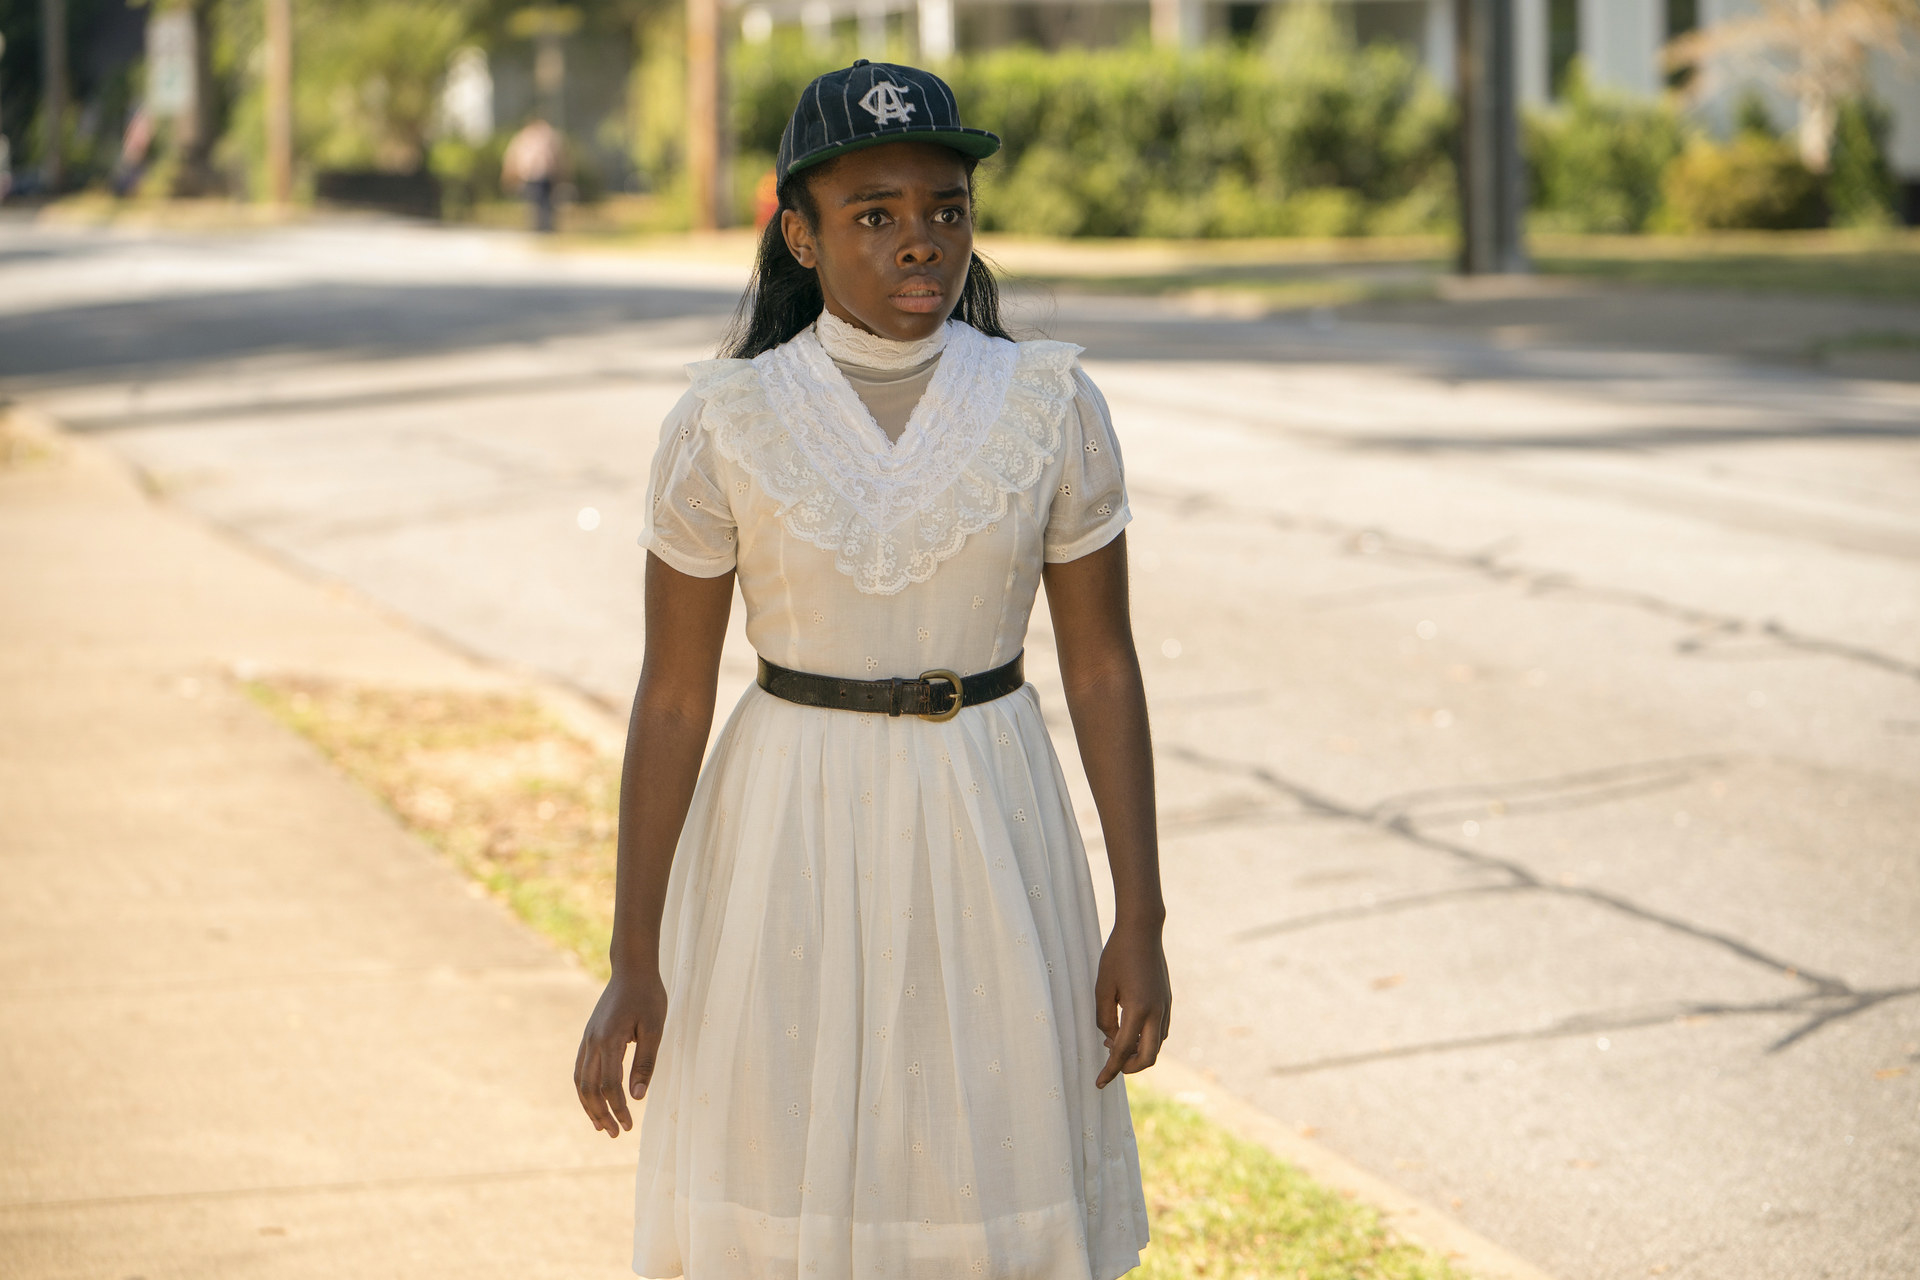 A Black teen girl walks along sidewalk in a white belted dress and baseball cap